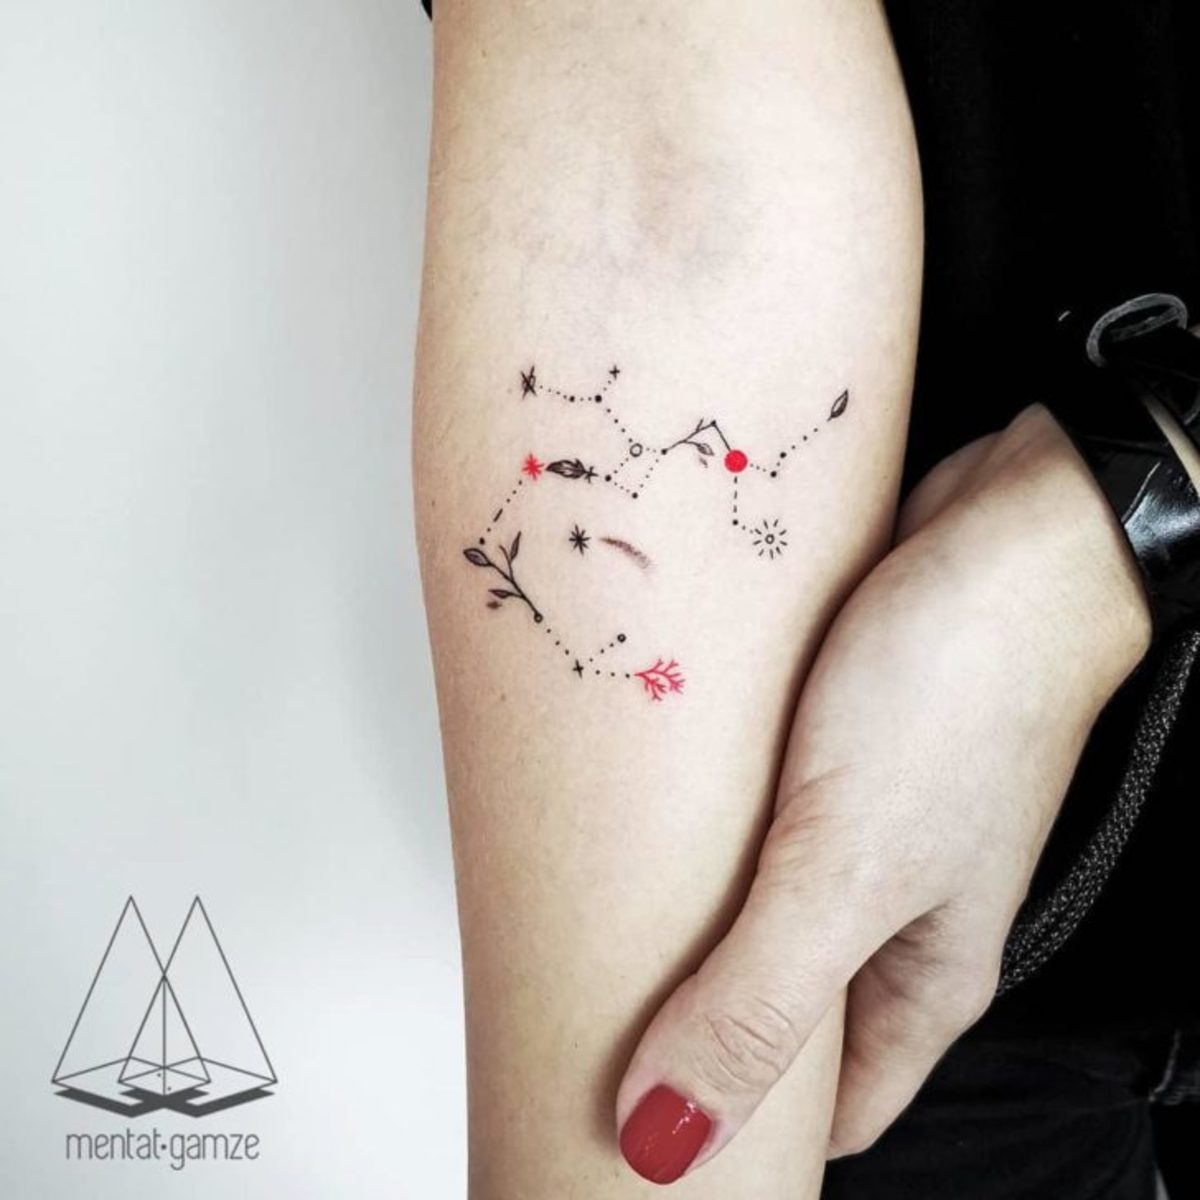 Skytten-Constellation-Tattoo-by-Mentat-Gamze-728x728